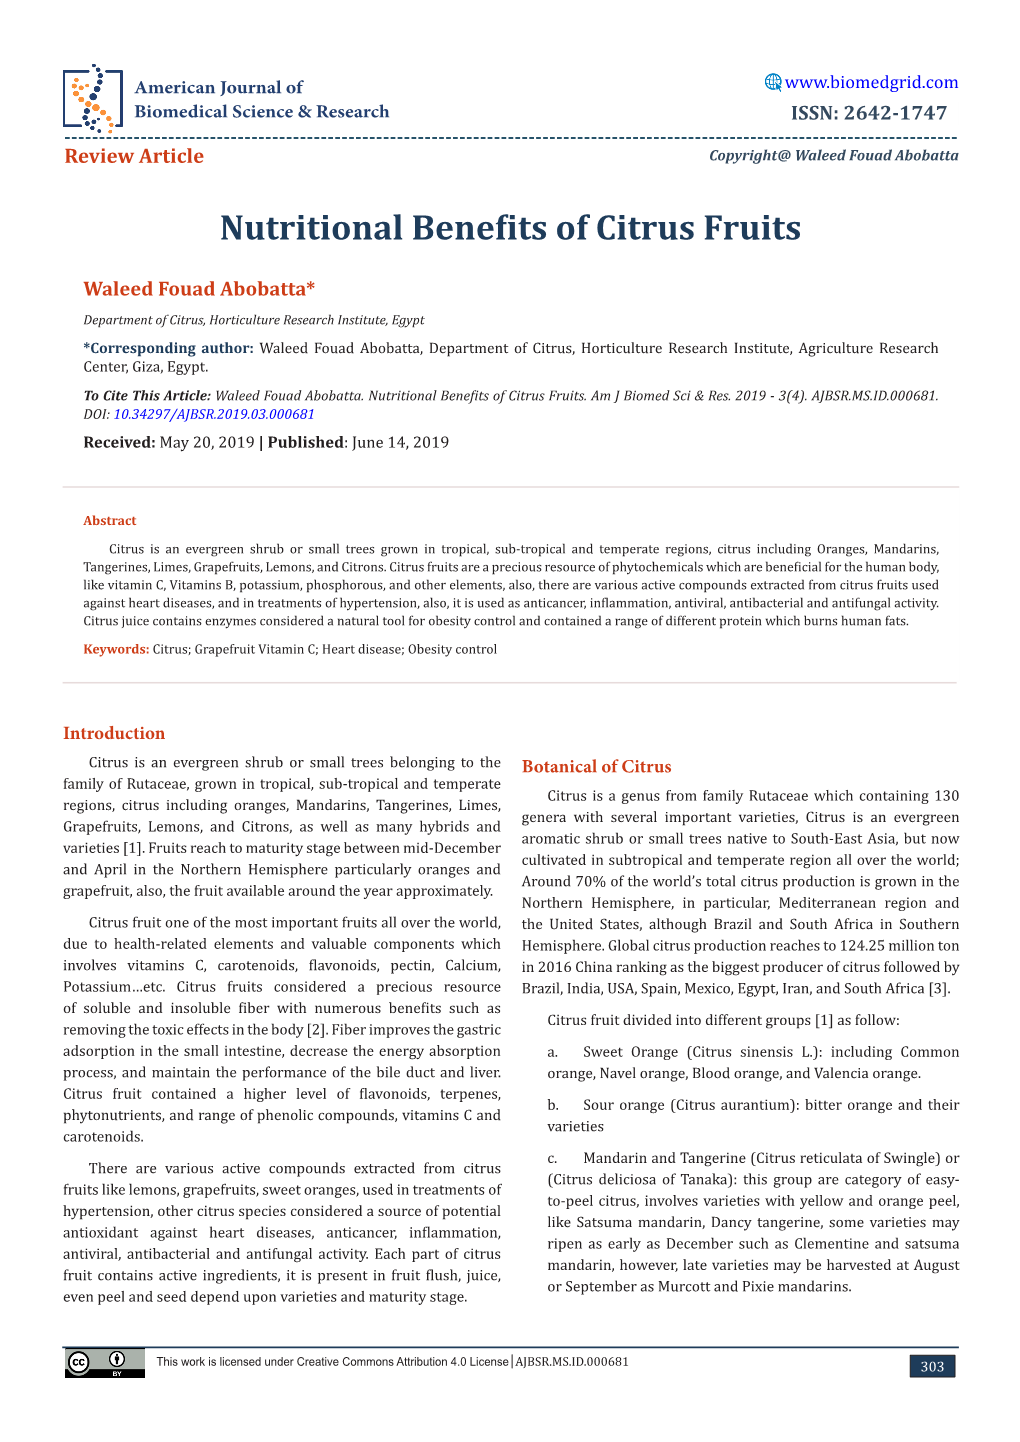 Nutritional Benefits of Citrus Fruits